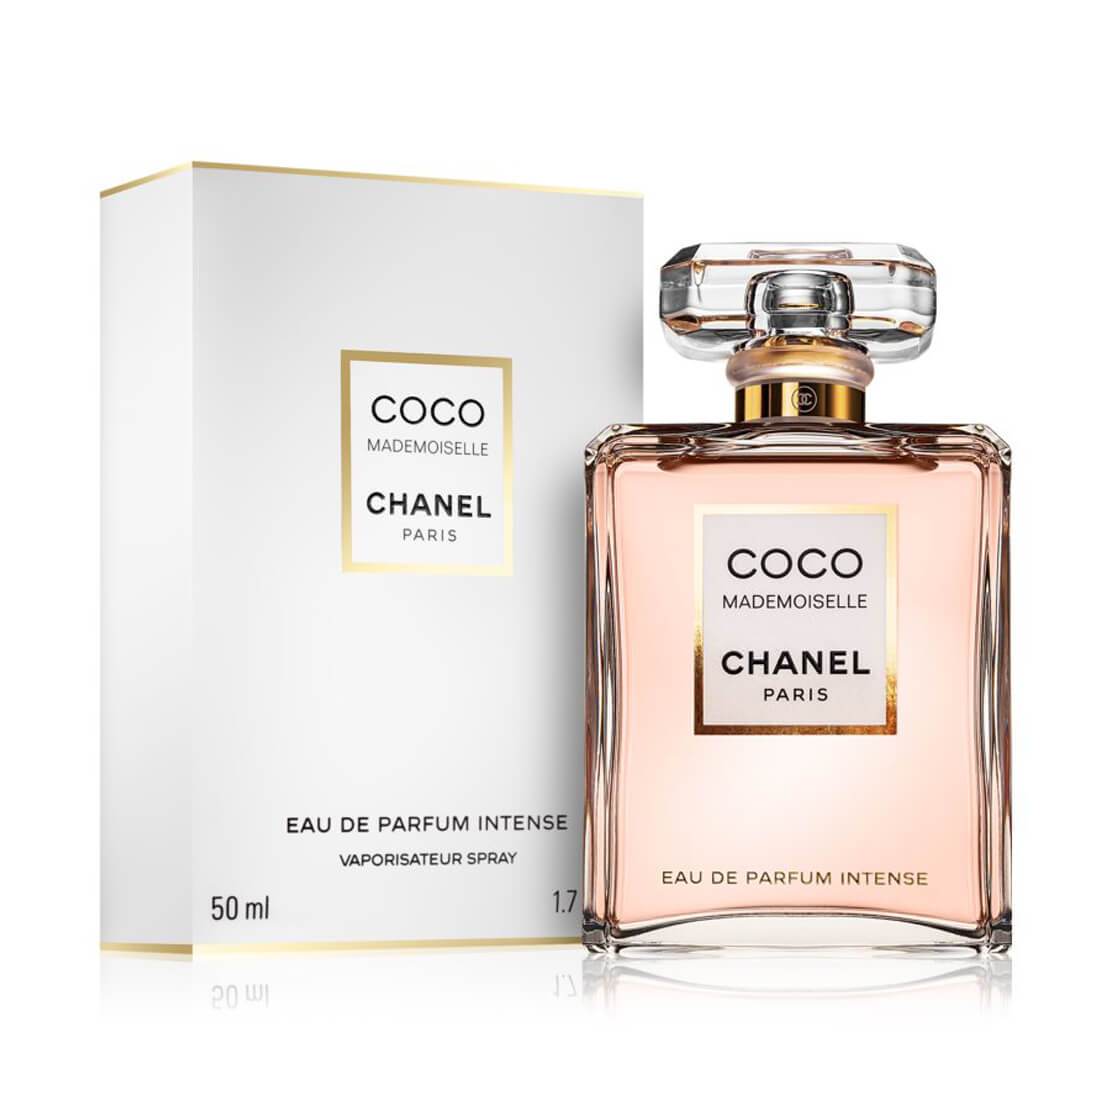 Chanel Coco Mademoiselle Intense Eau De Perfume For Women – 50ml